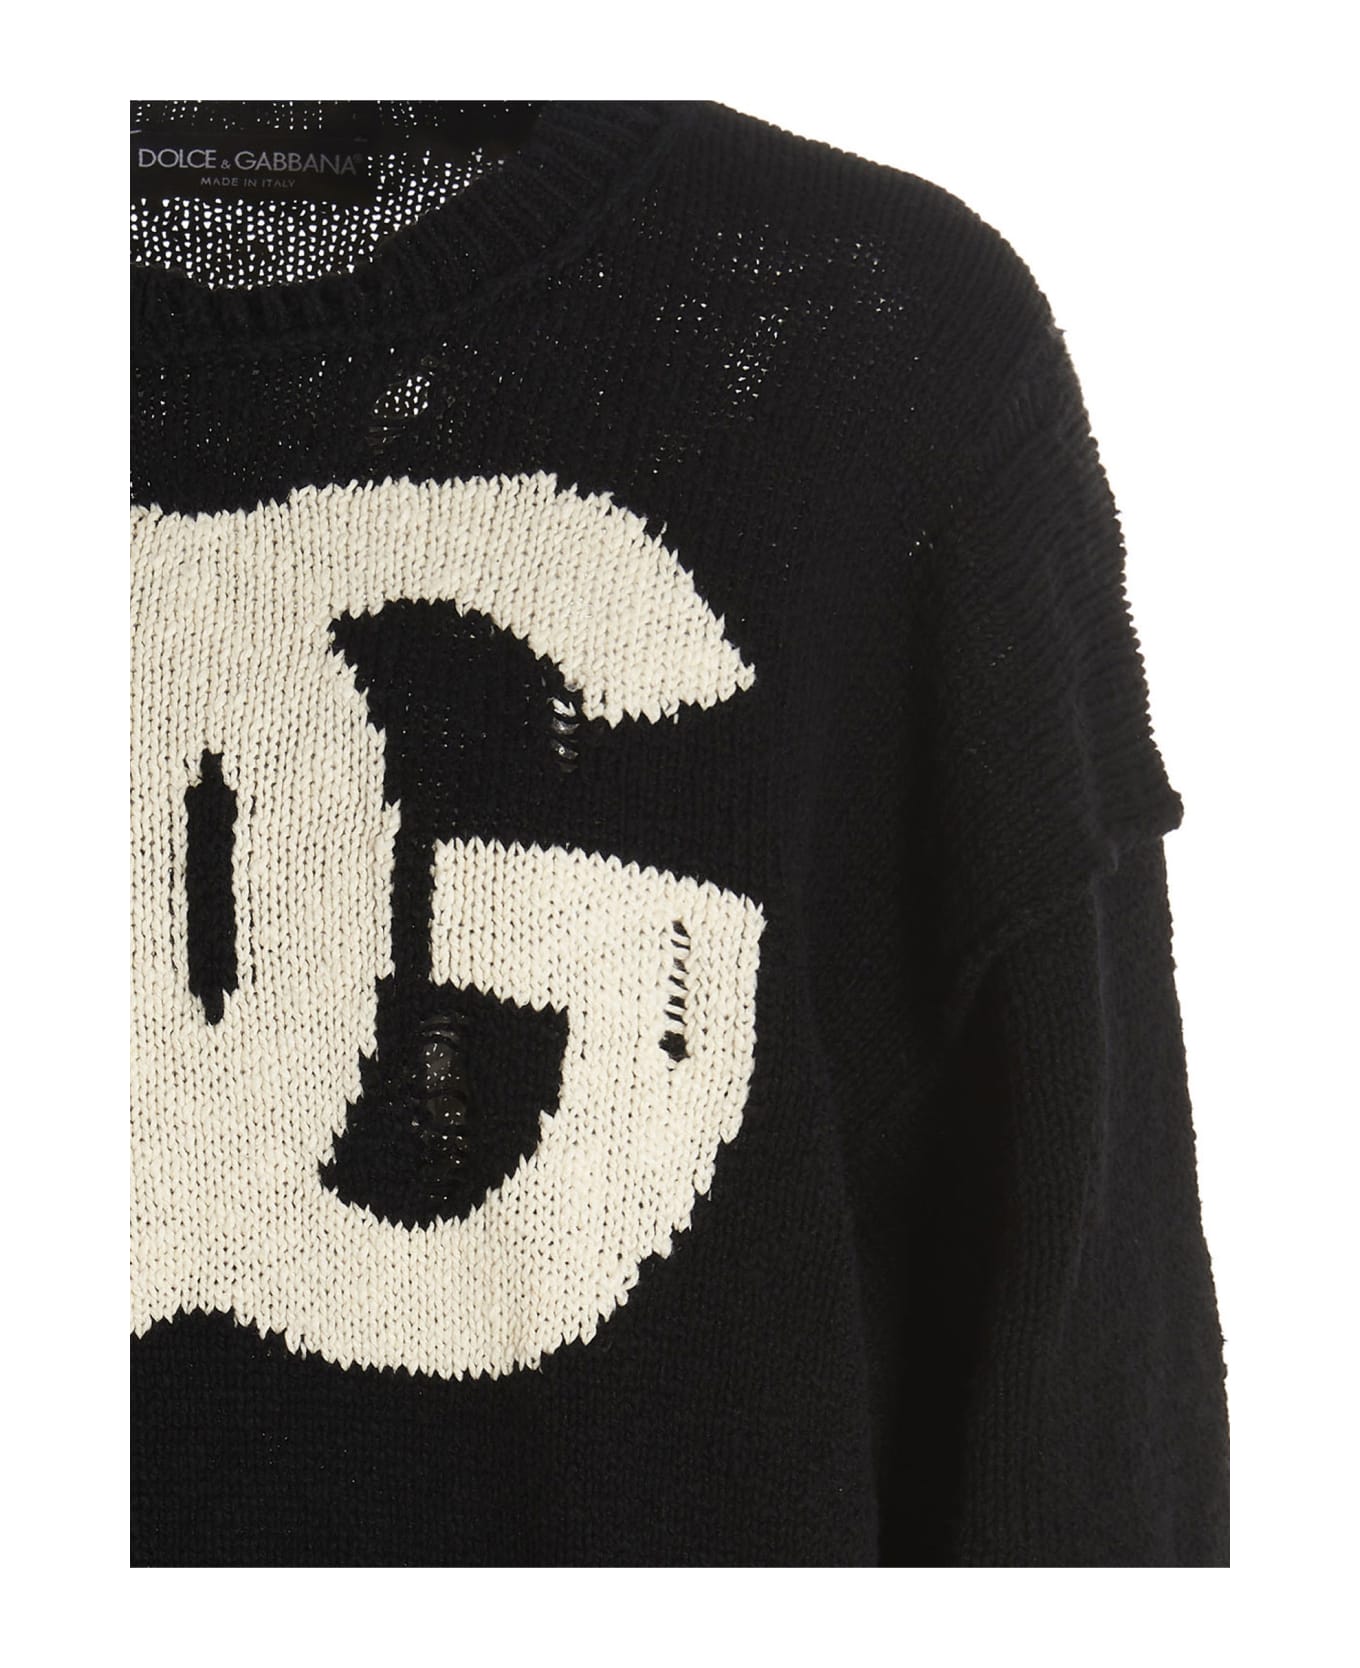 Dolce & Gabbana Cotton Blend Oversize Sweater - White/Black